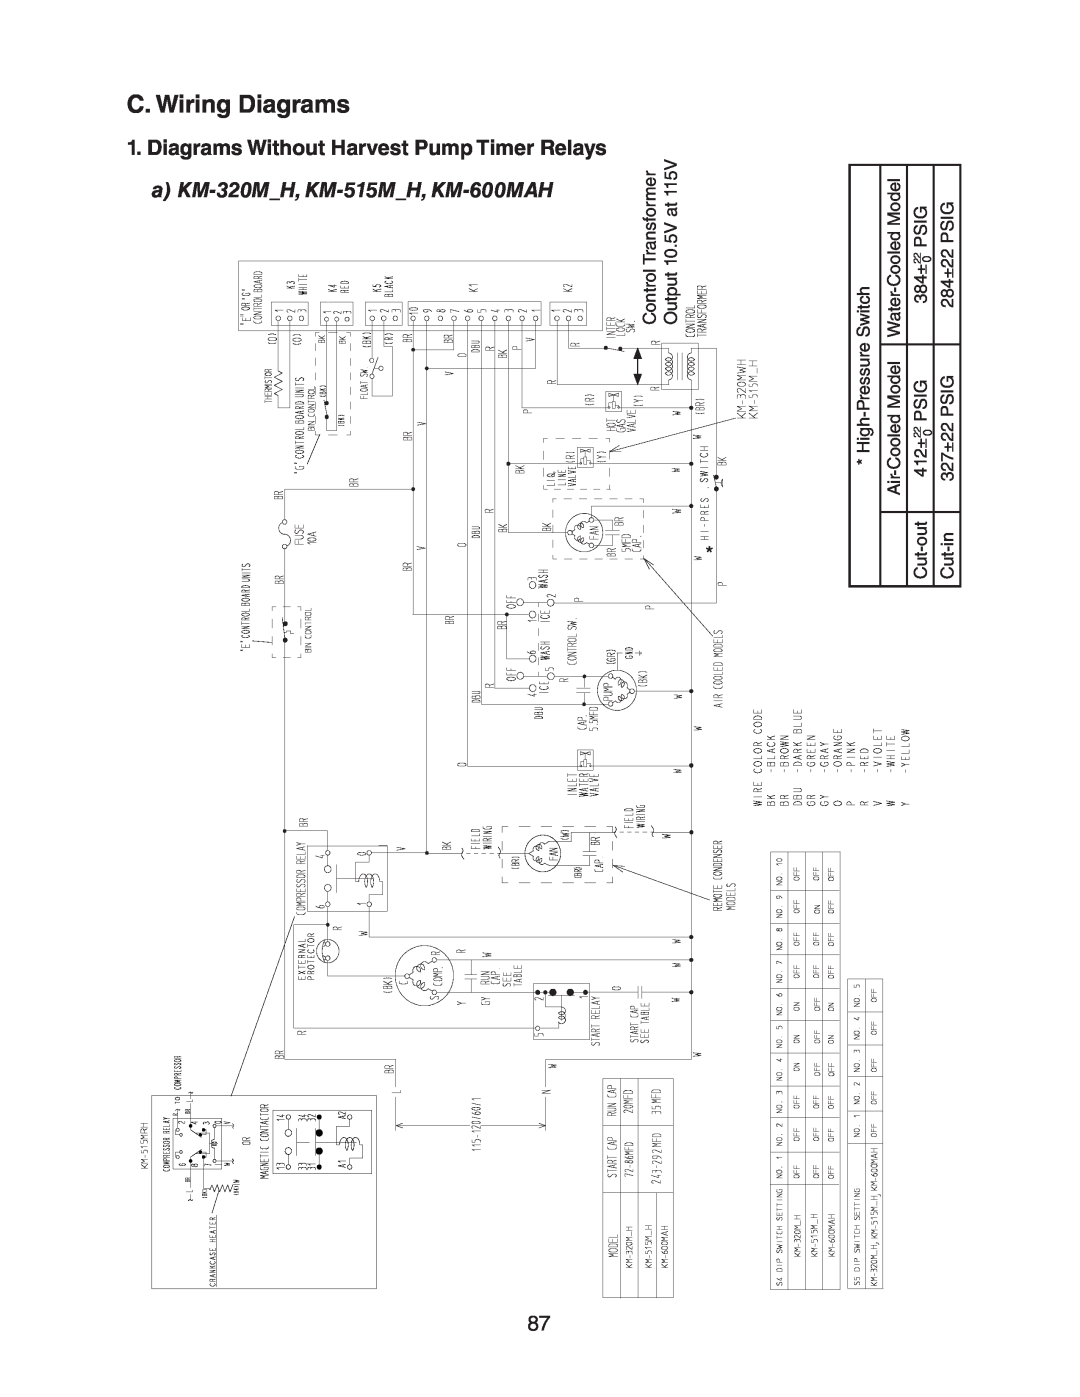 Hoshizaki MRH KM-901MAH C. Wiring Diagrams, Diagrams Without Harvest Pump Timer Relays, a KM-320MH, KM-515MH, KM-600MAH 